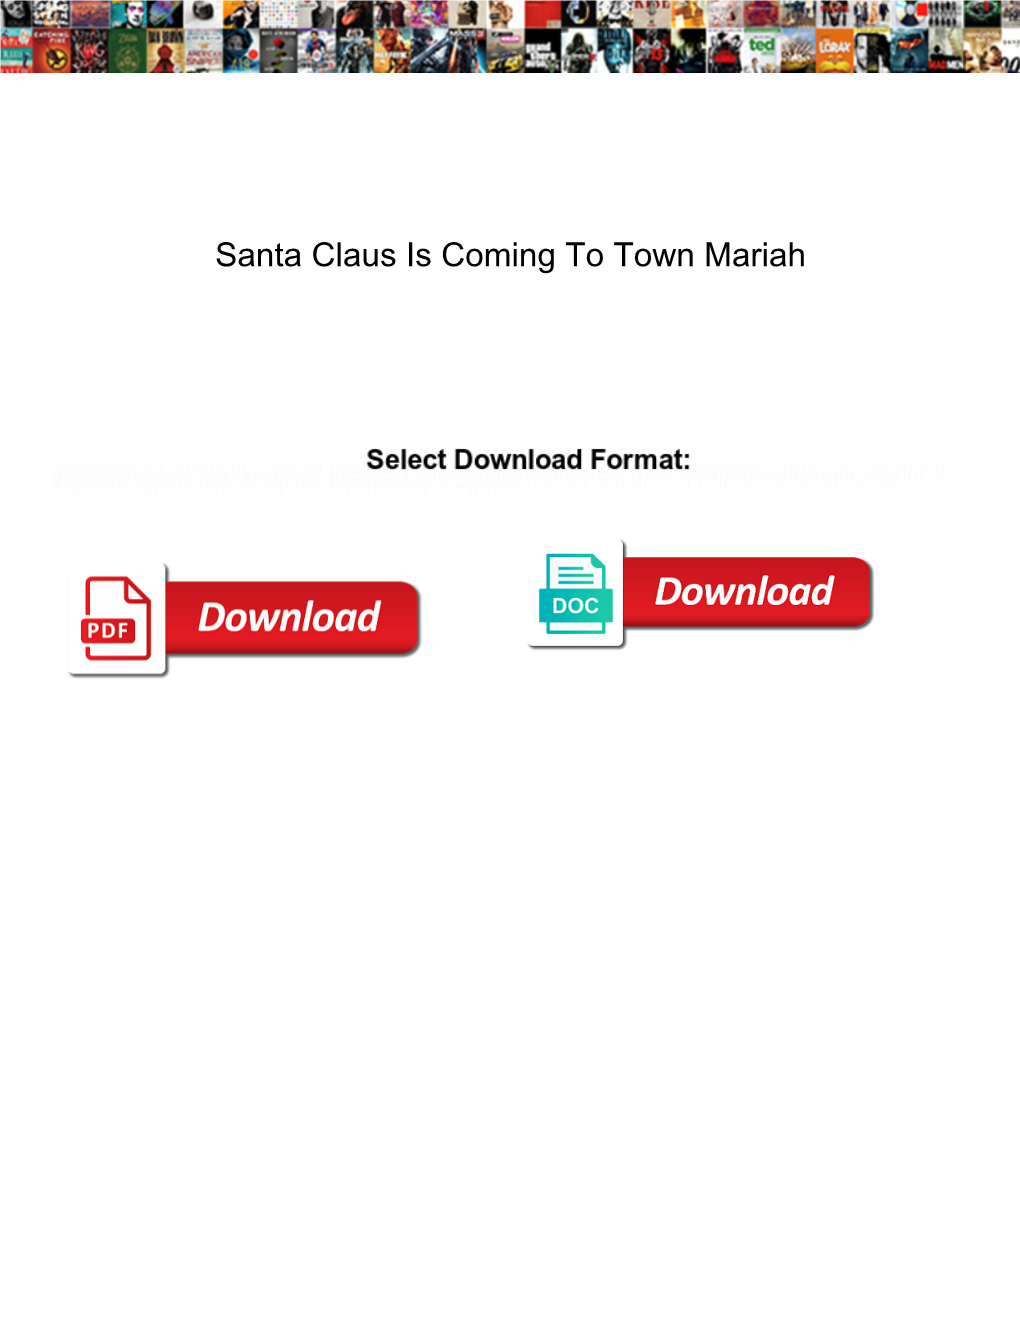 Santa Claus Is Coming to Town Mariah